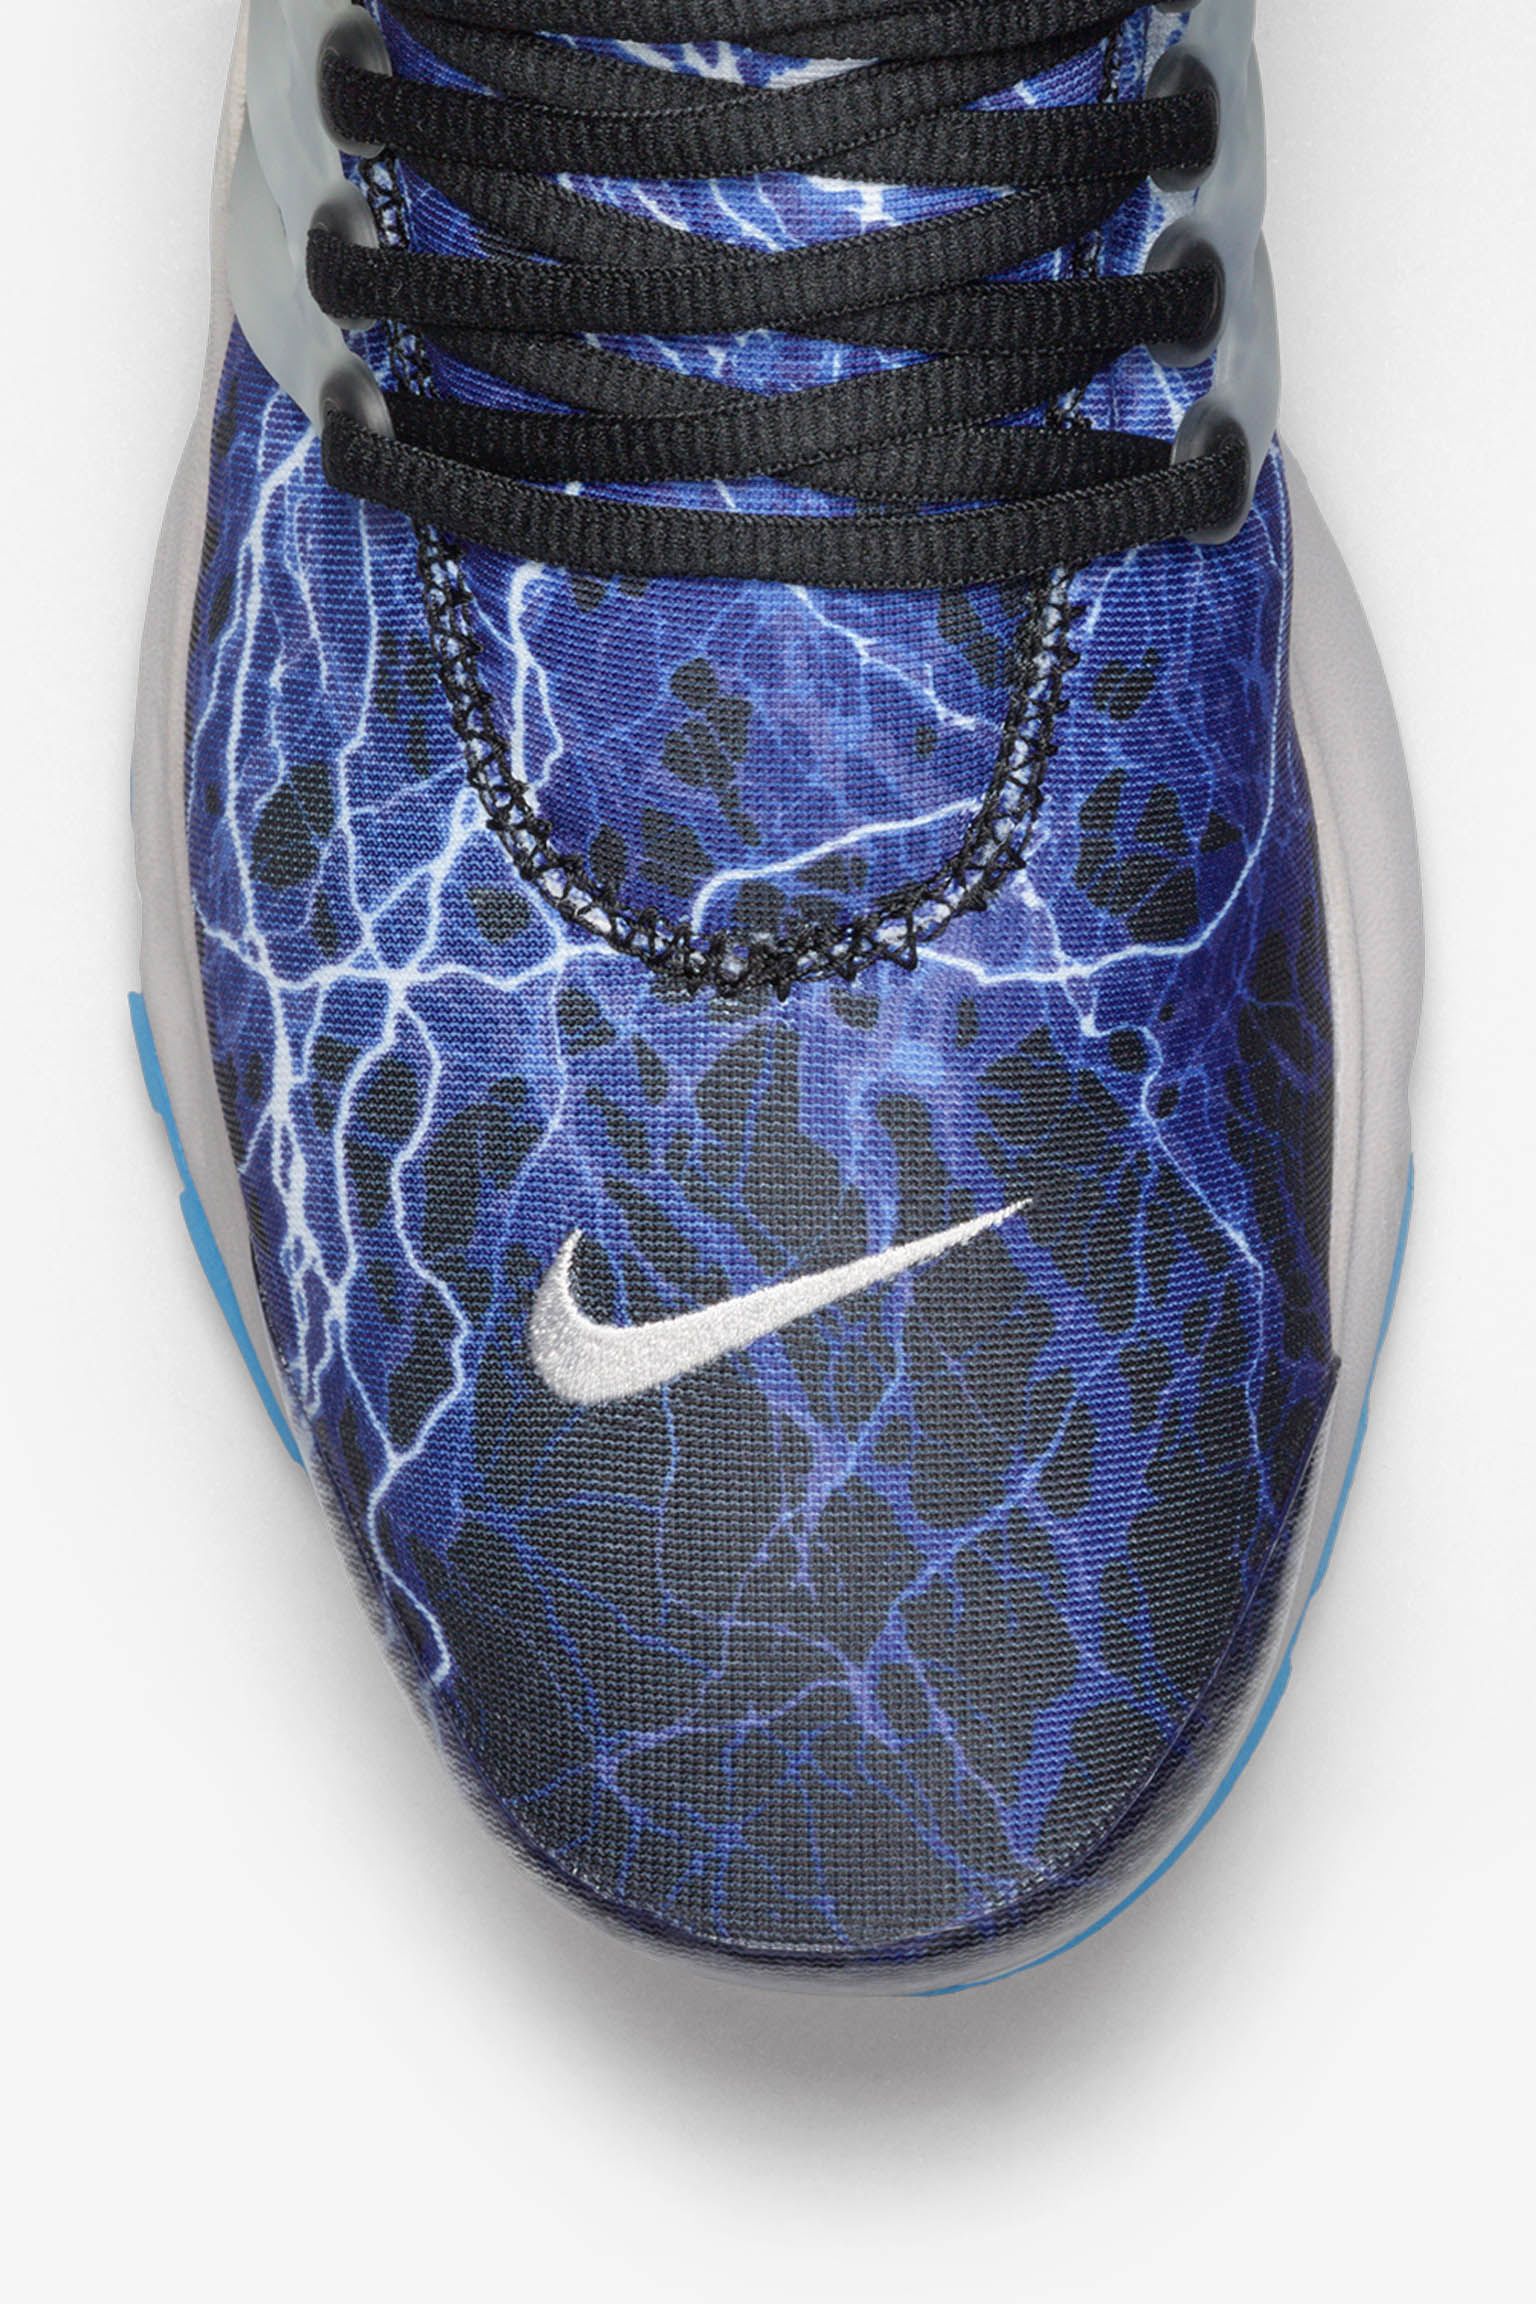 Air Presto 'Lightning' Release Nike